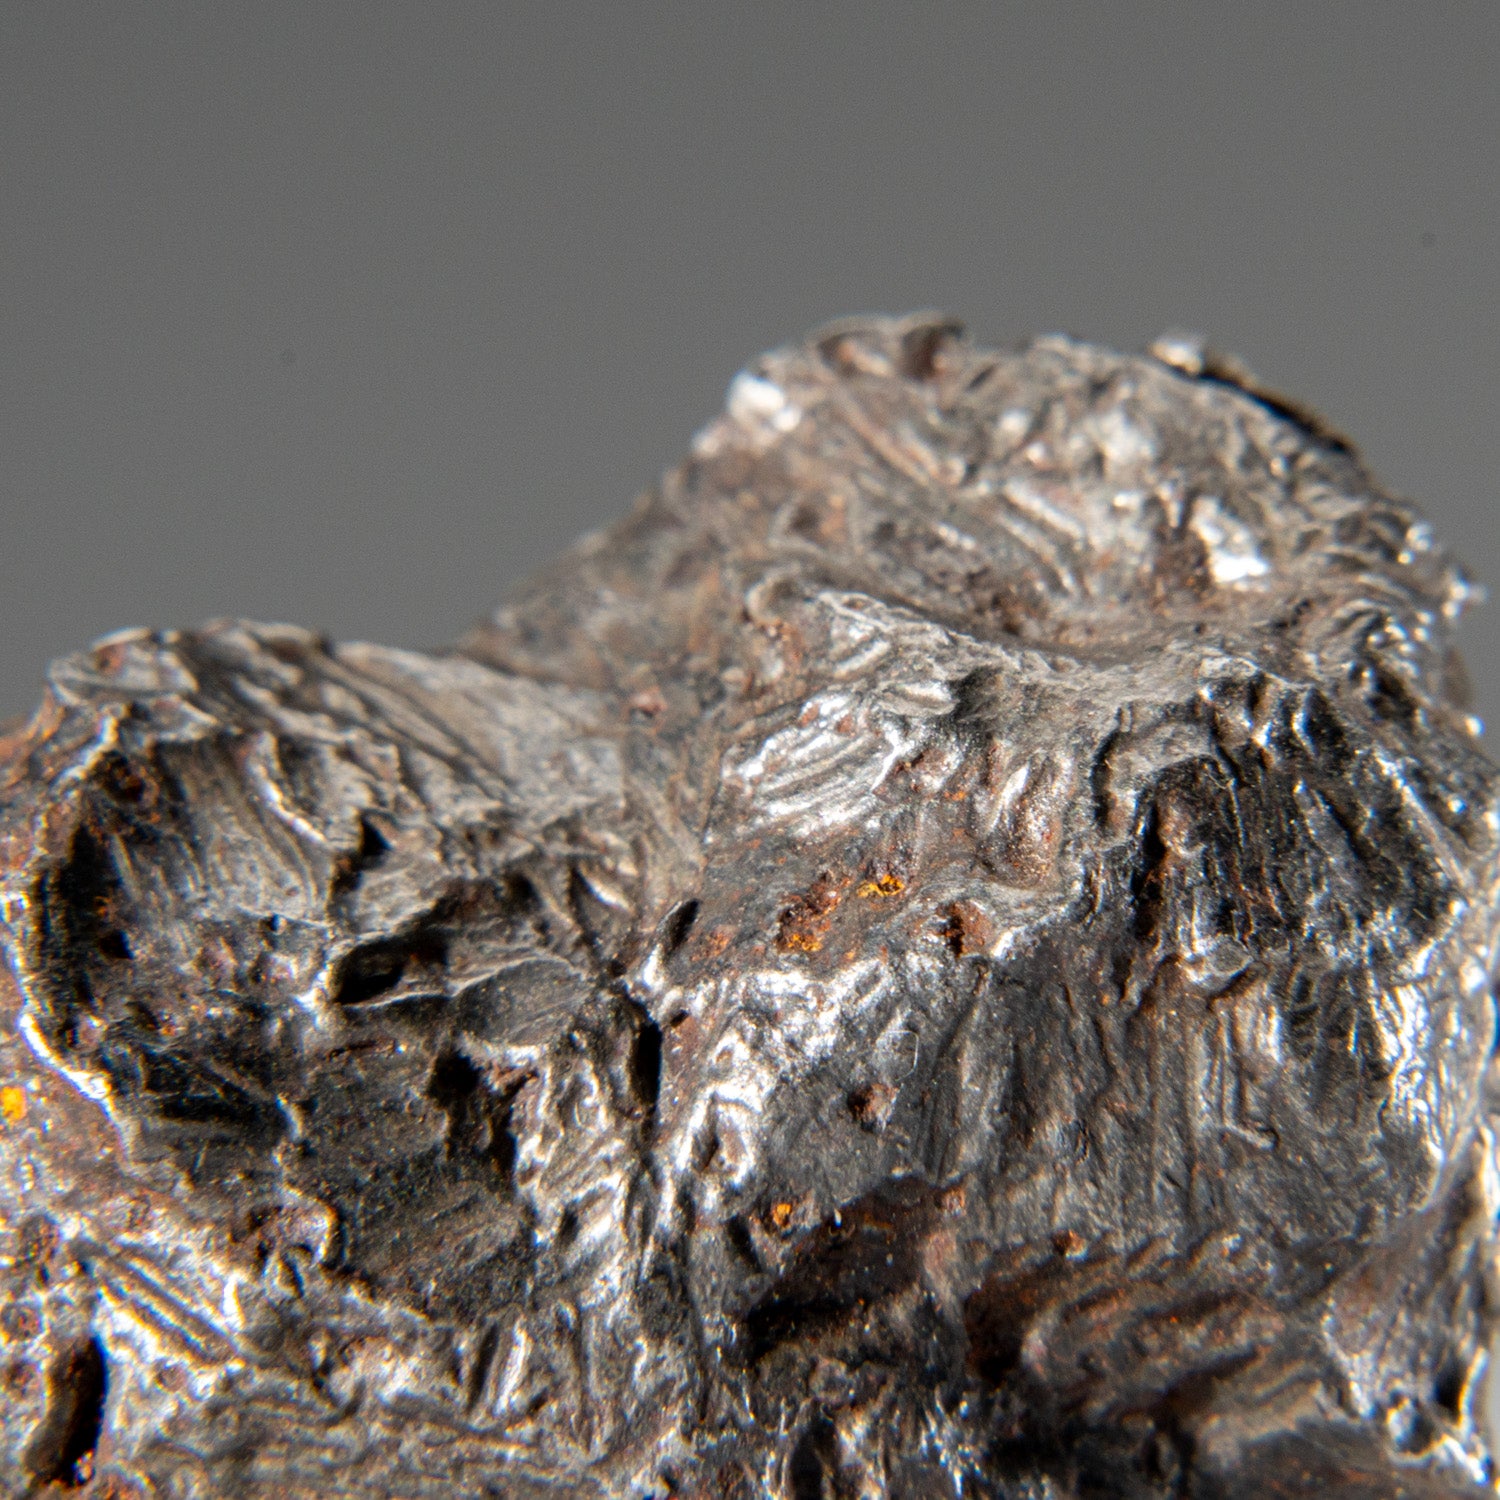 Genuine Natural Sikhote-Alin Meteorite from Russia (94.8 grams)